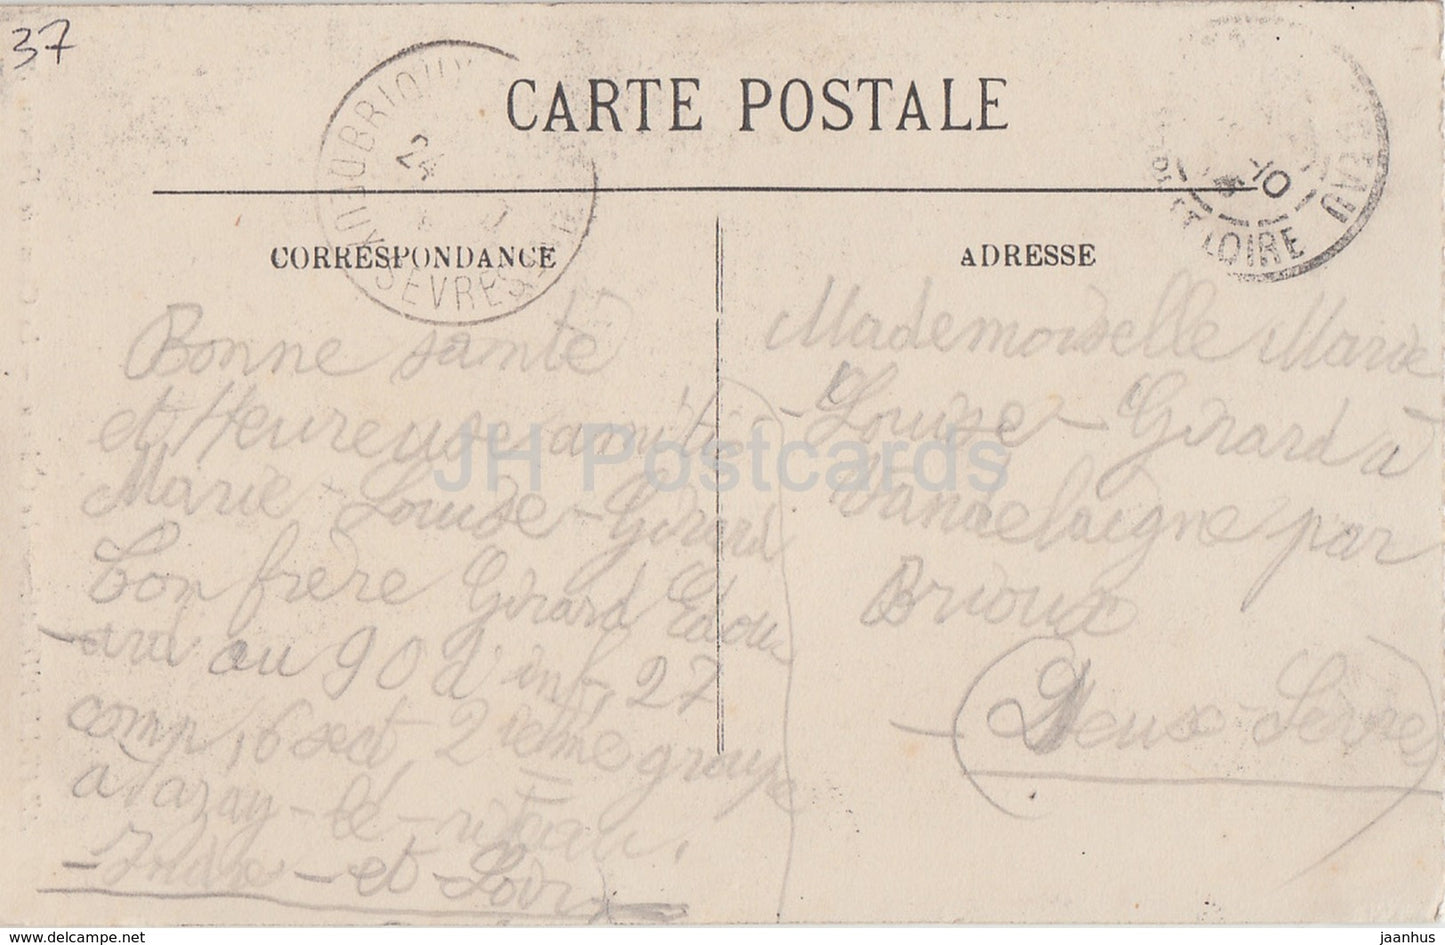 Azay Le Rideau - Le Chateau - La Cheminee Francois Ier - castle - 18 - old postcard - France - used